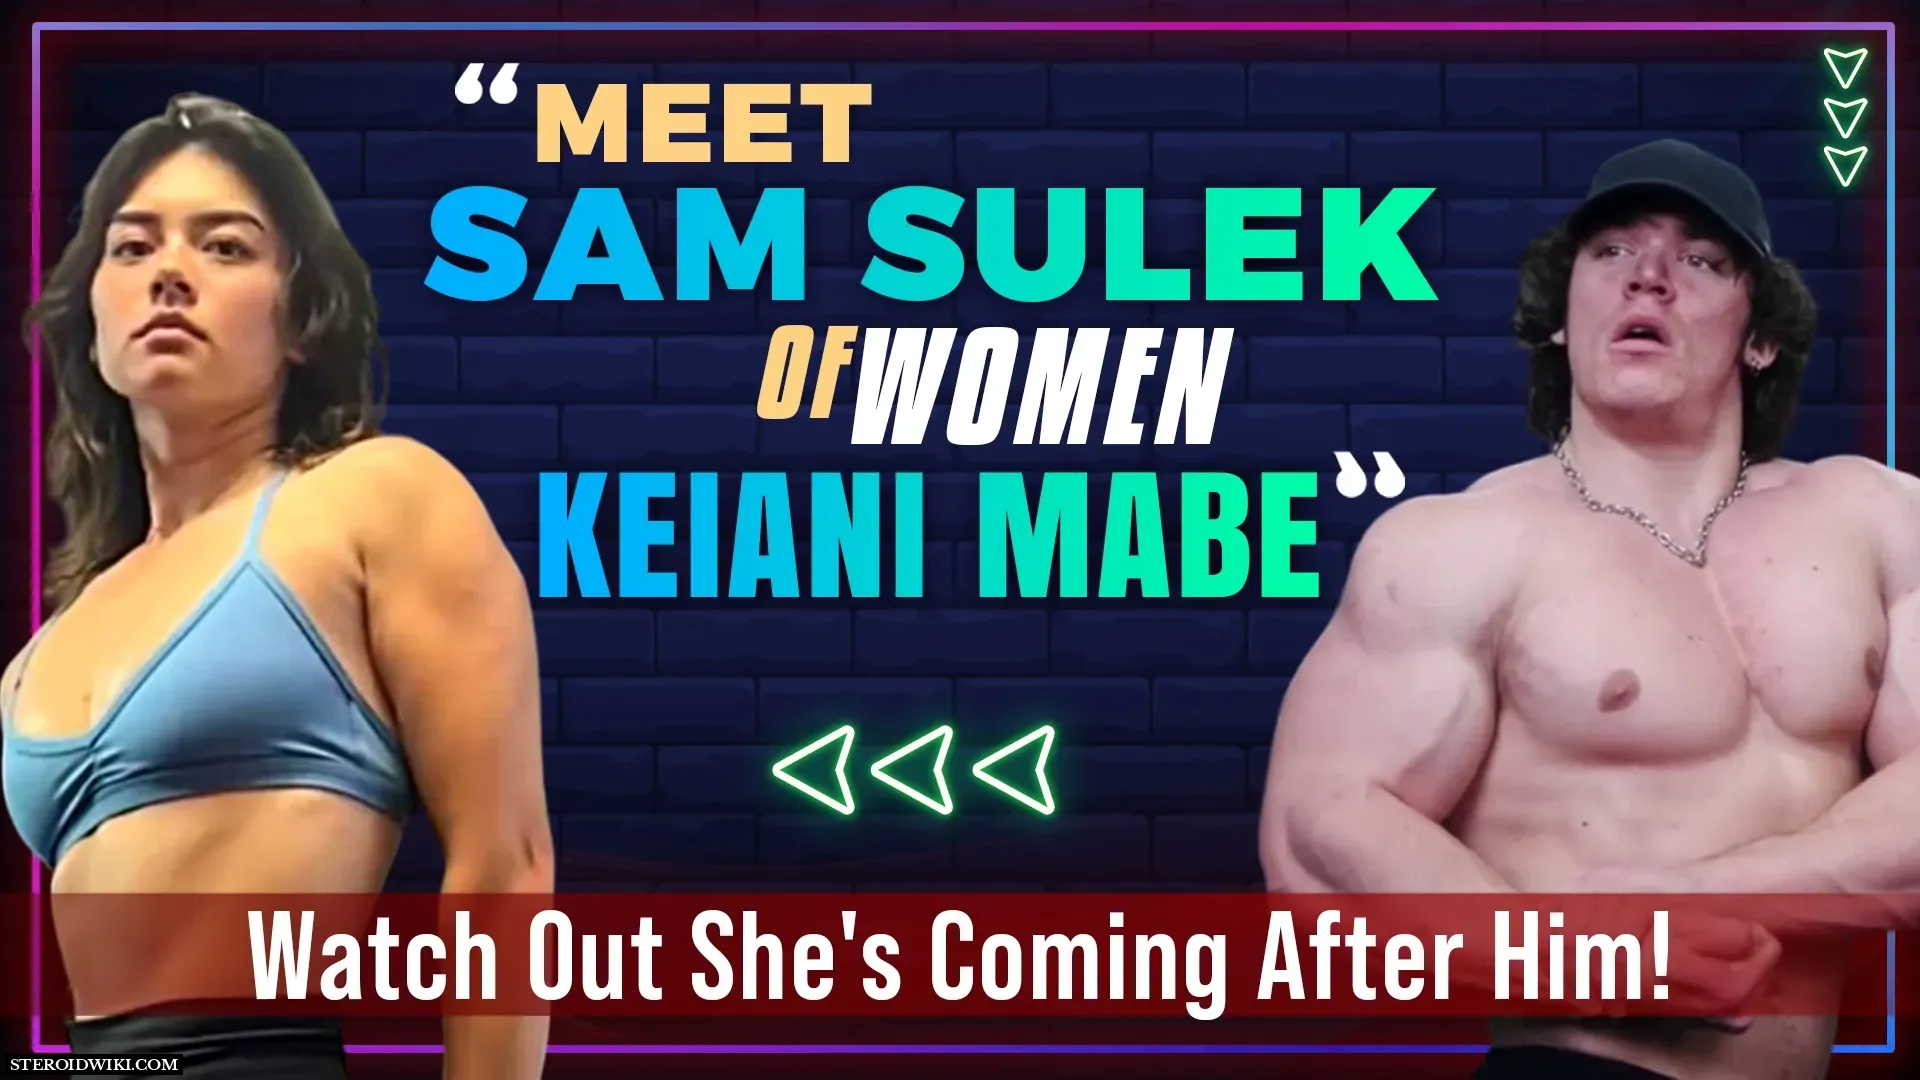 Sam Sulek vs Keiani Mabe: Upcoming Fierce Rivalry